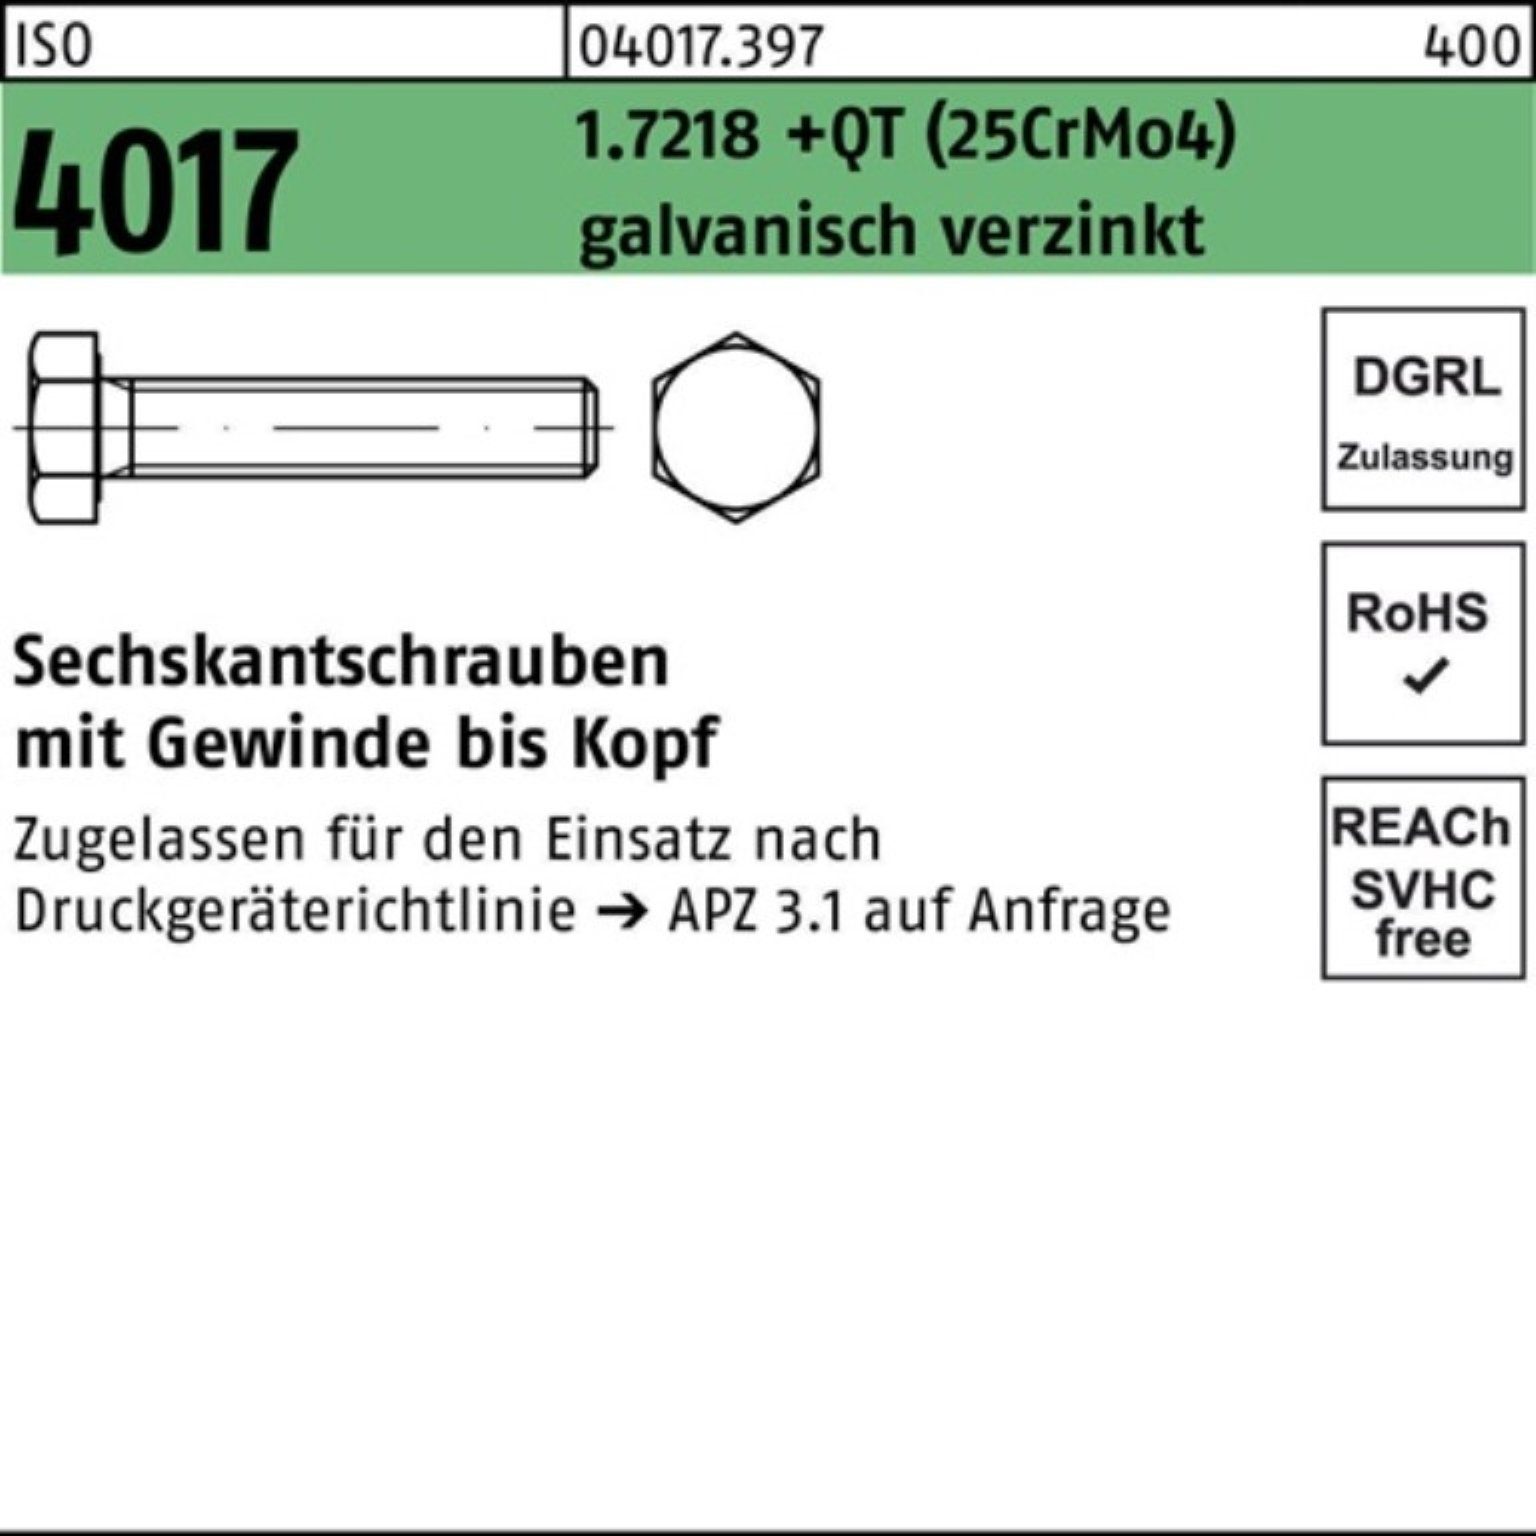 VG 4017 M24x70 Pack (25CrMo4) ISO Bufab g Sechskantschraube 1.7218 100er Sechskantschraube +QT